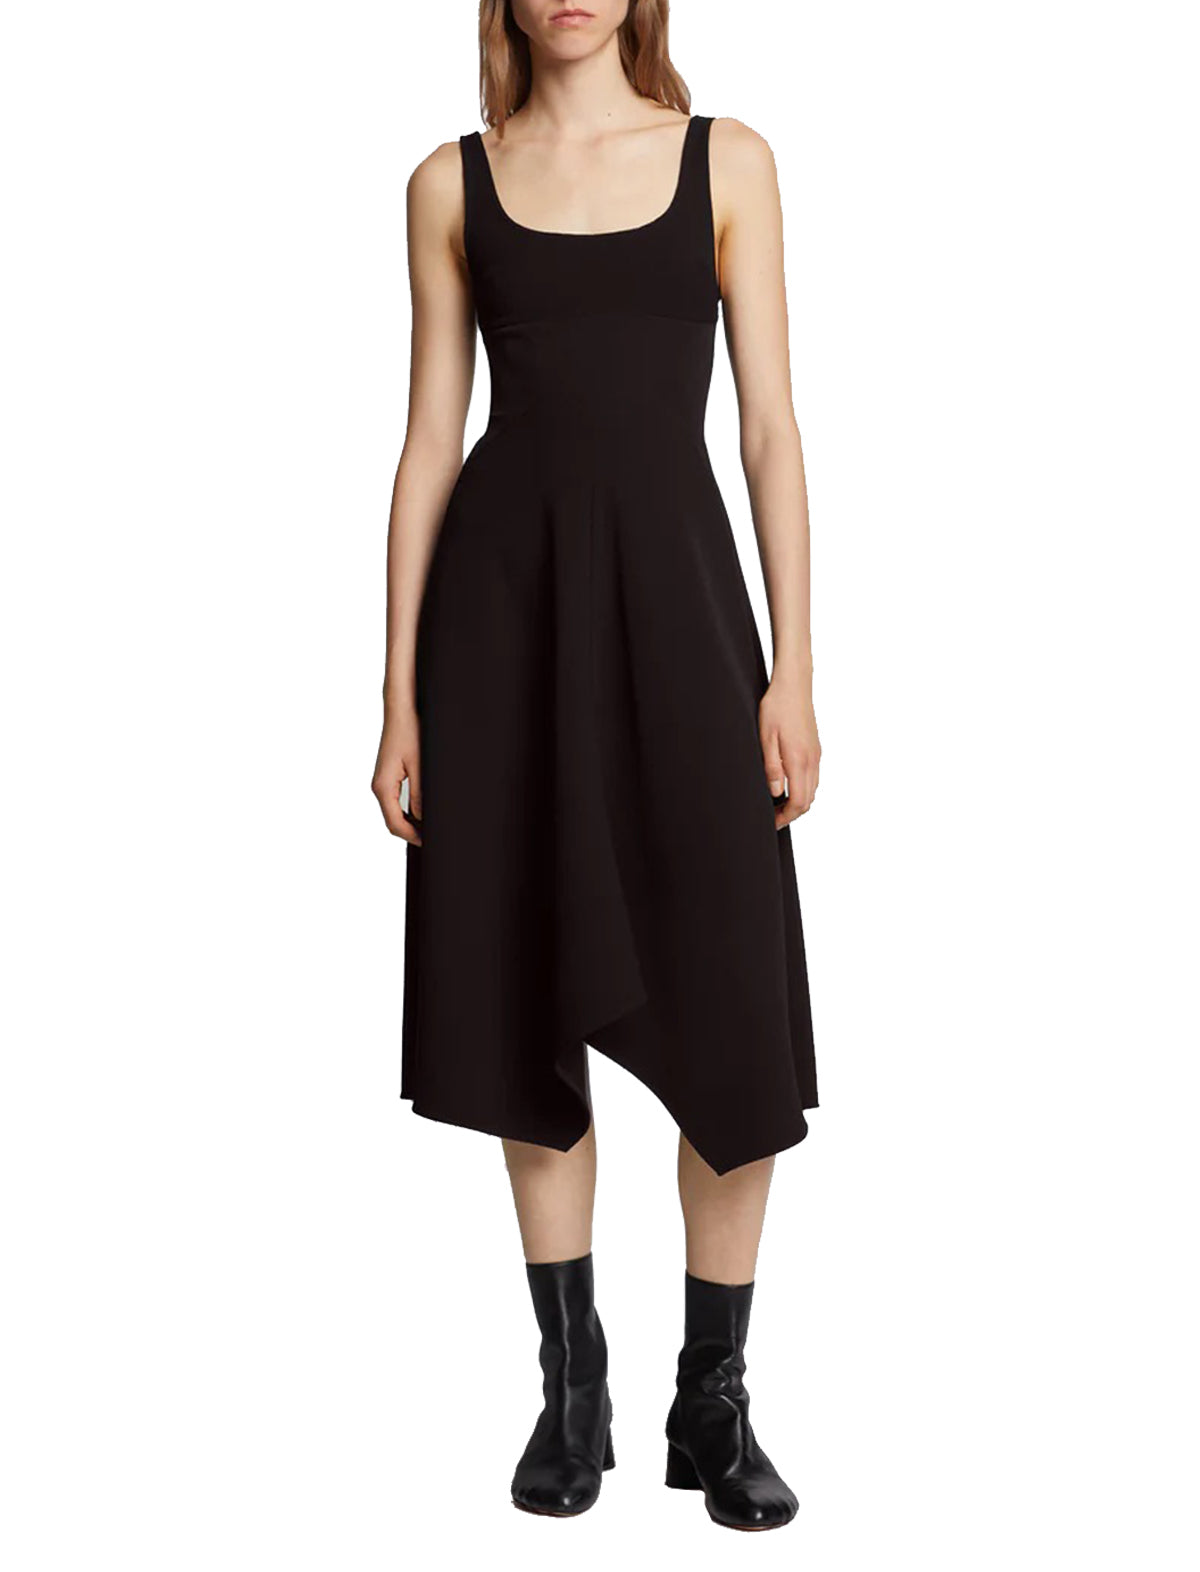 PROENZA SCHOULER WHITE LABEL Barre Aymmetrical Knit Dress in Black